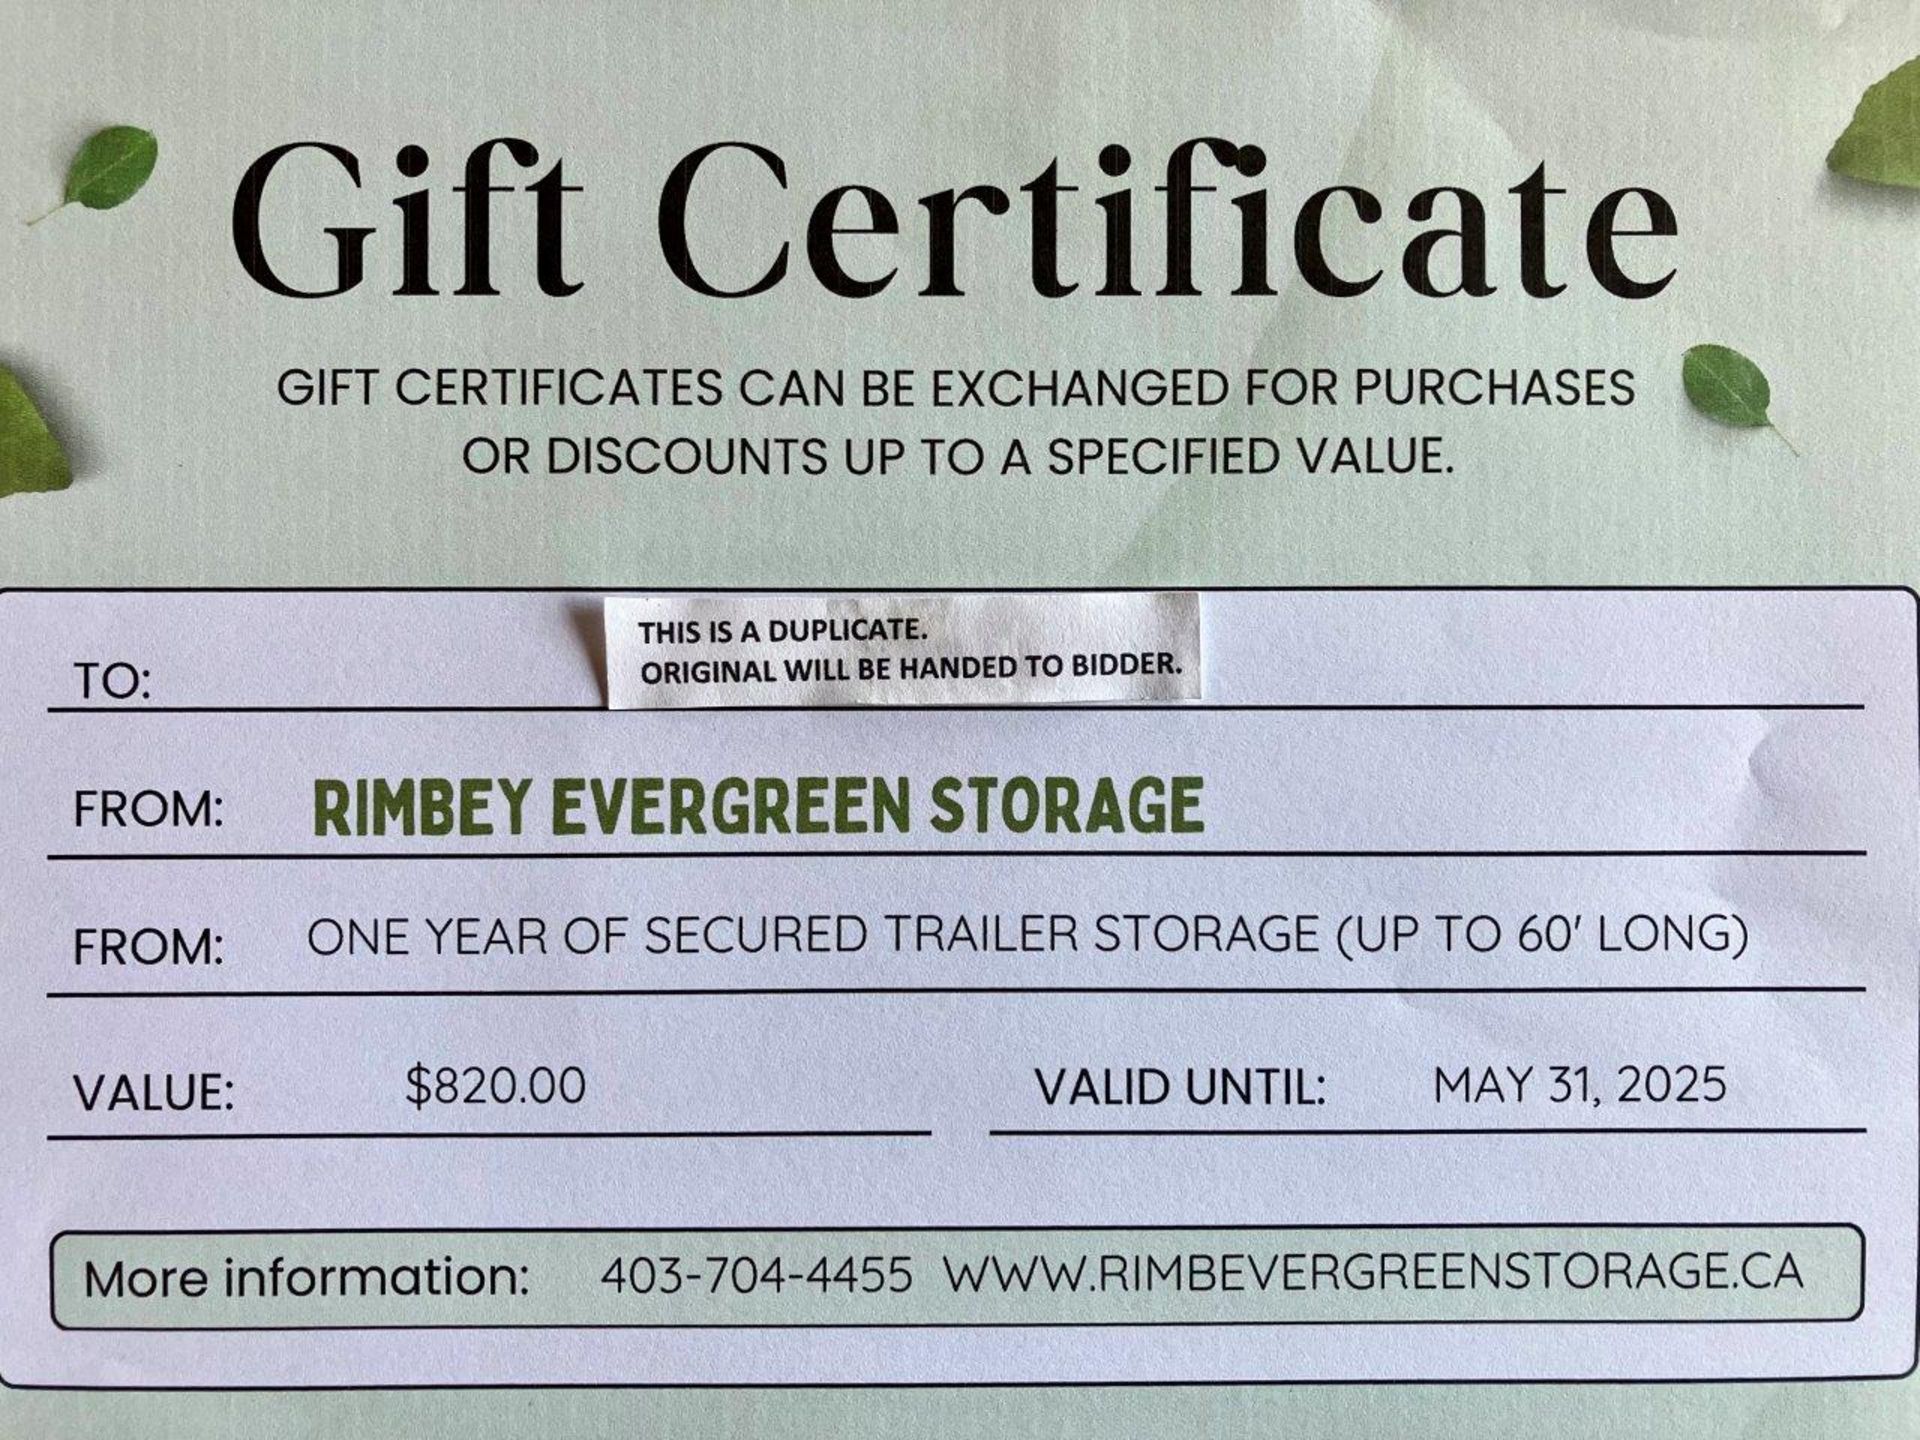 RIMBEY EVERGREEN STORAGE GIFT CERTIFICATE: TRAILER STORAGE - Image 2 of 2